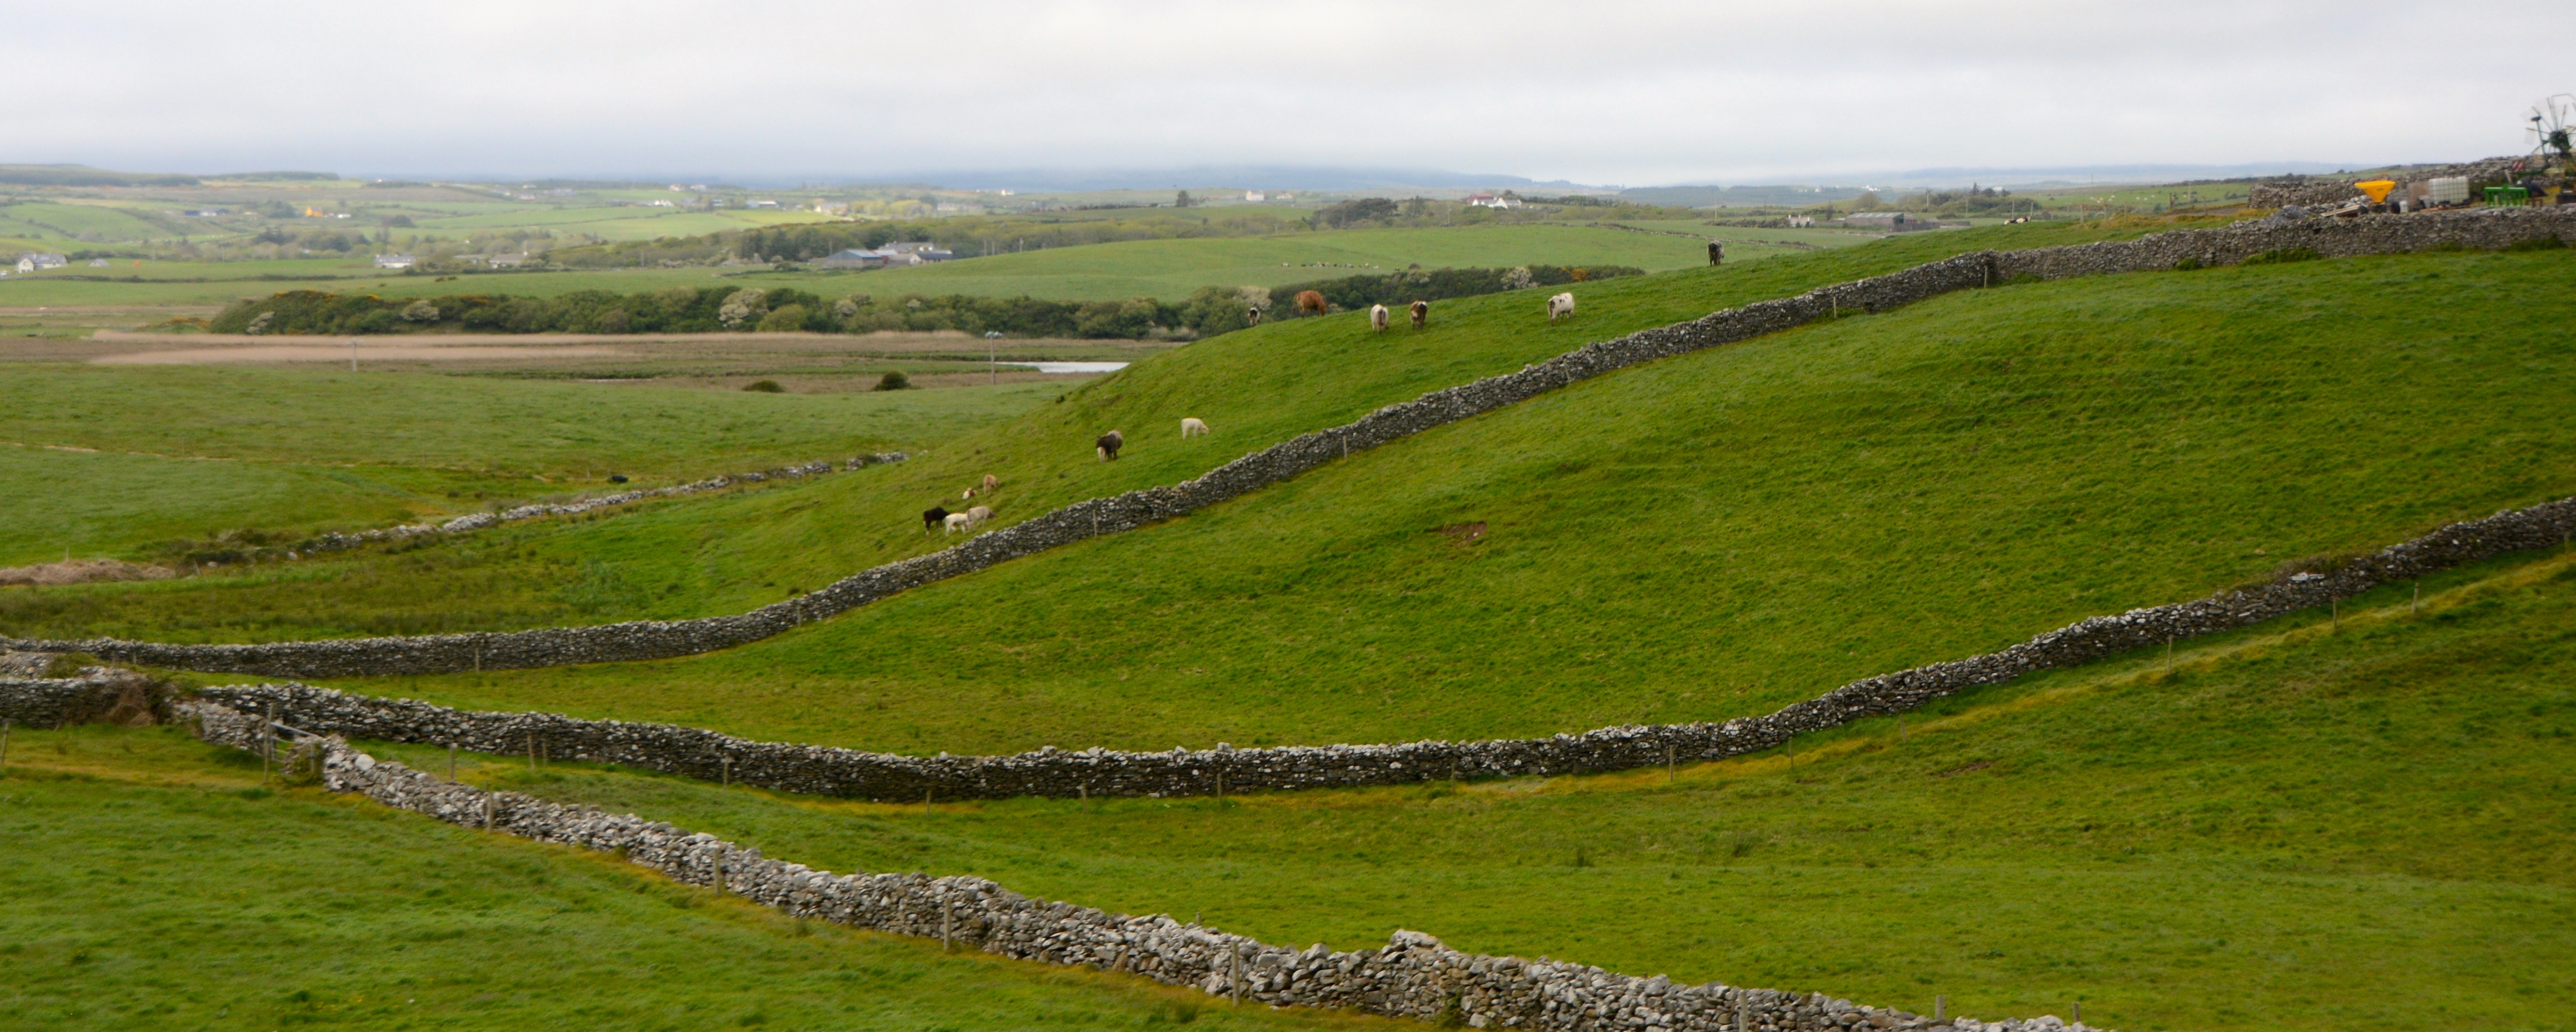 The stone walls of the Irish countryside. www.gypsyat60.com